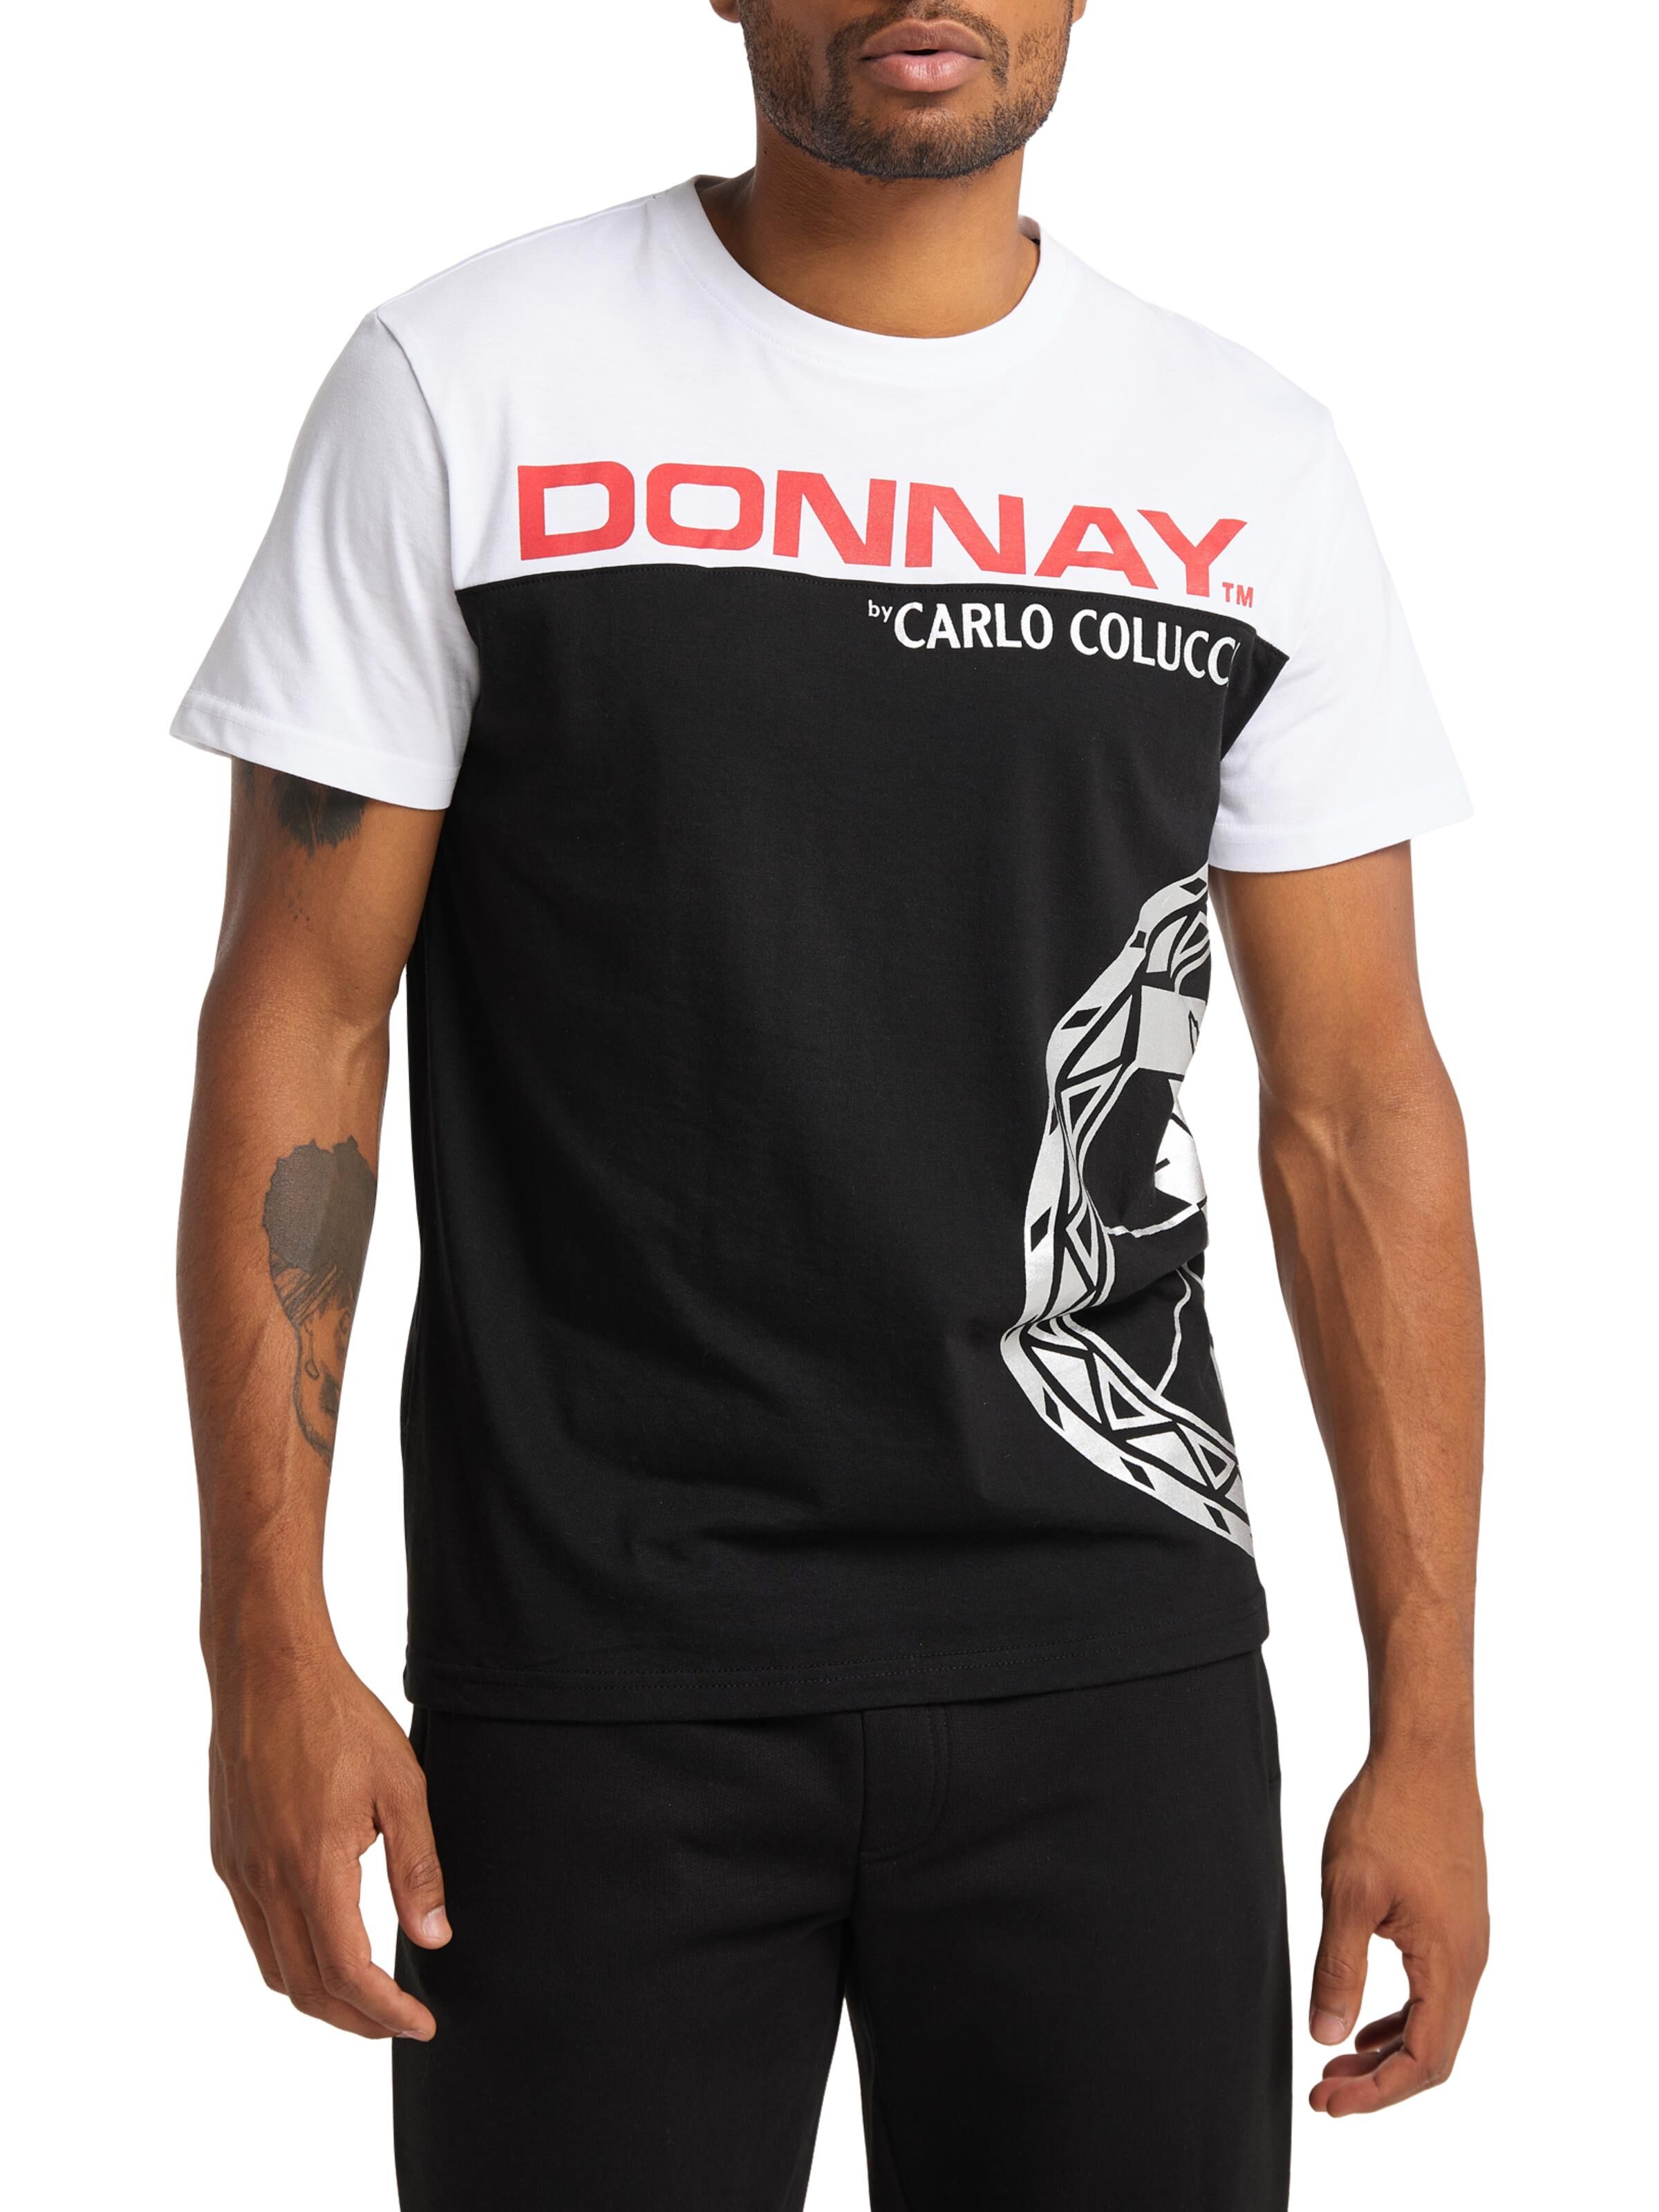 DONNAY by CARLO COLUCCI Herren T-Shirt mit Logo